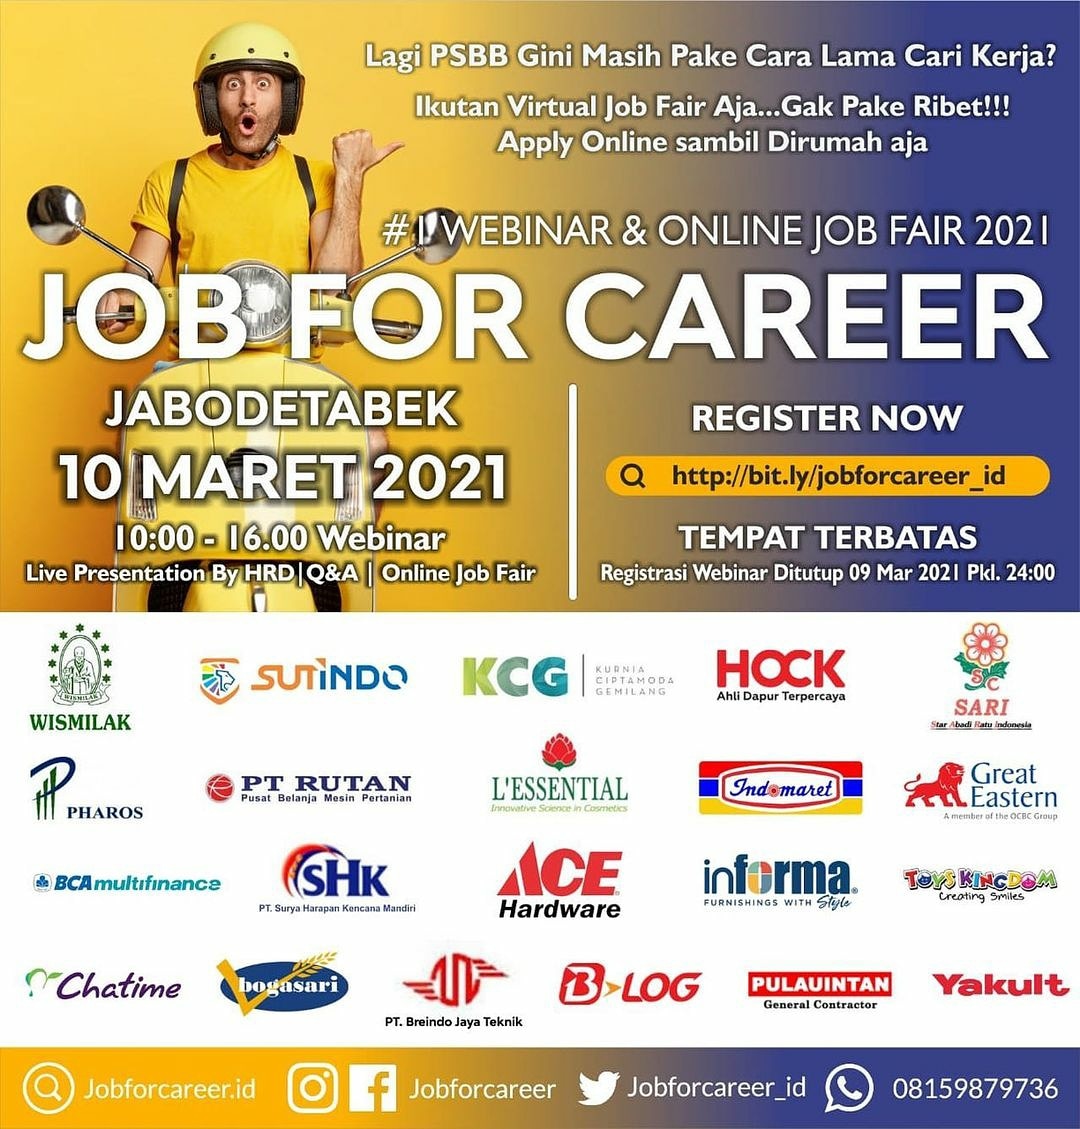 Jakarta Webinar & Online Job Fair 2021, Job for Career Terbaru